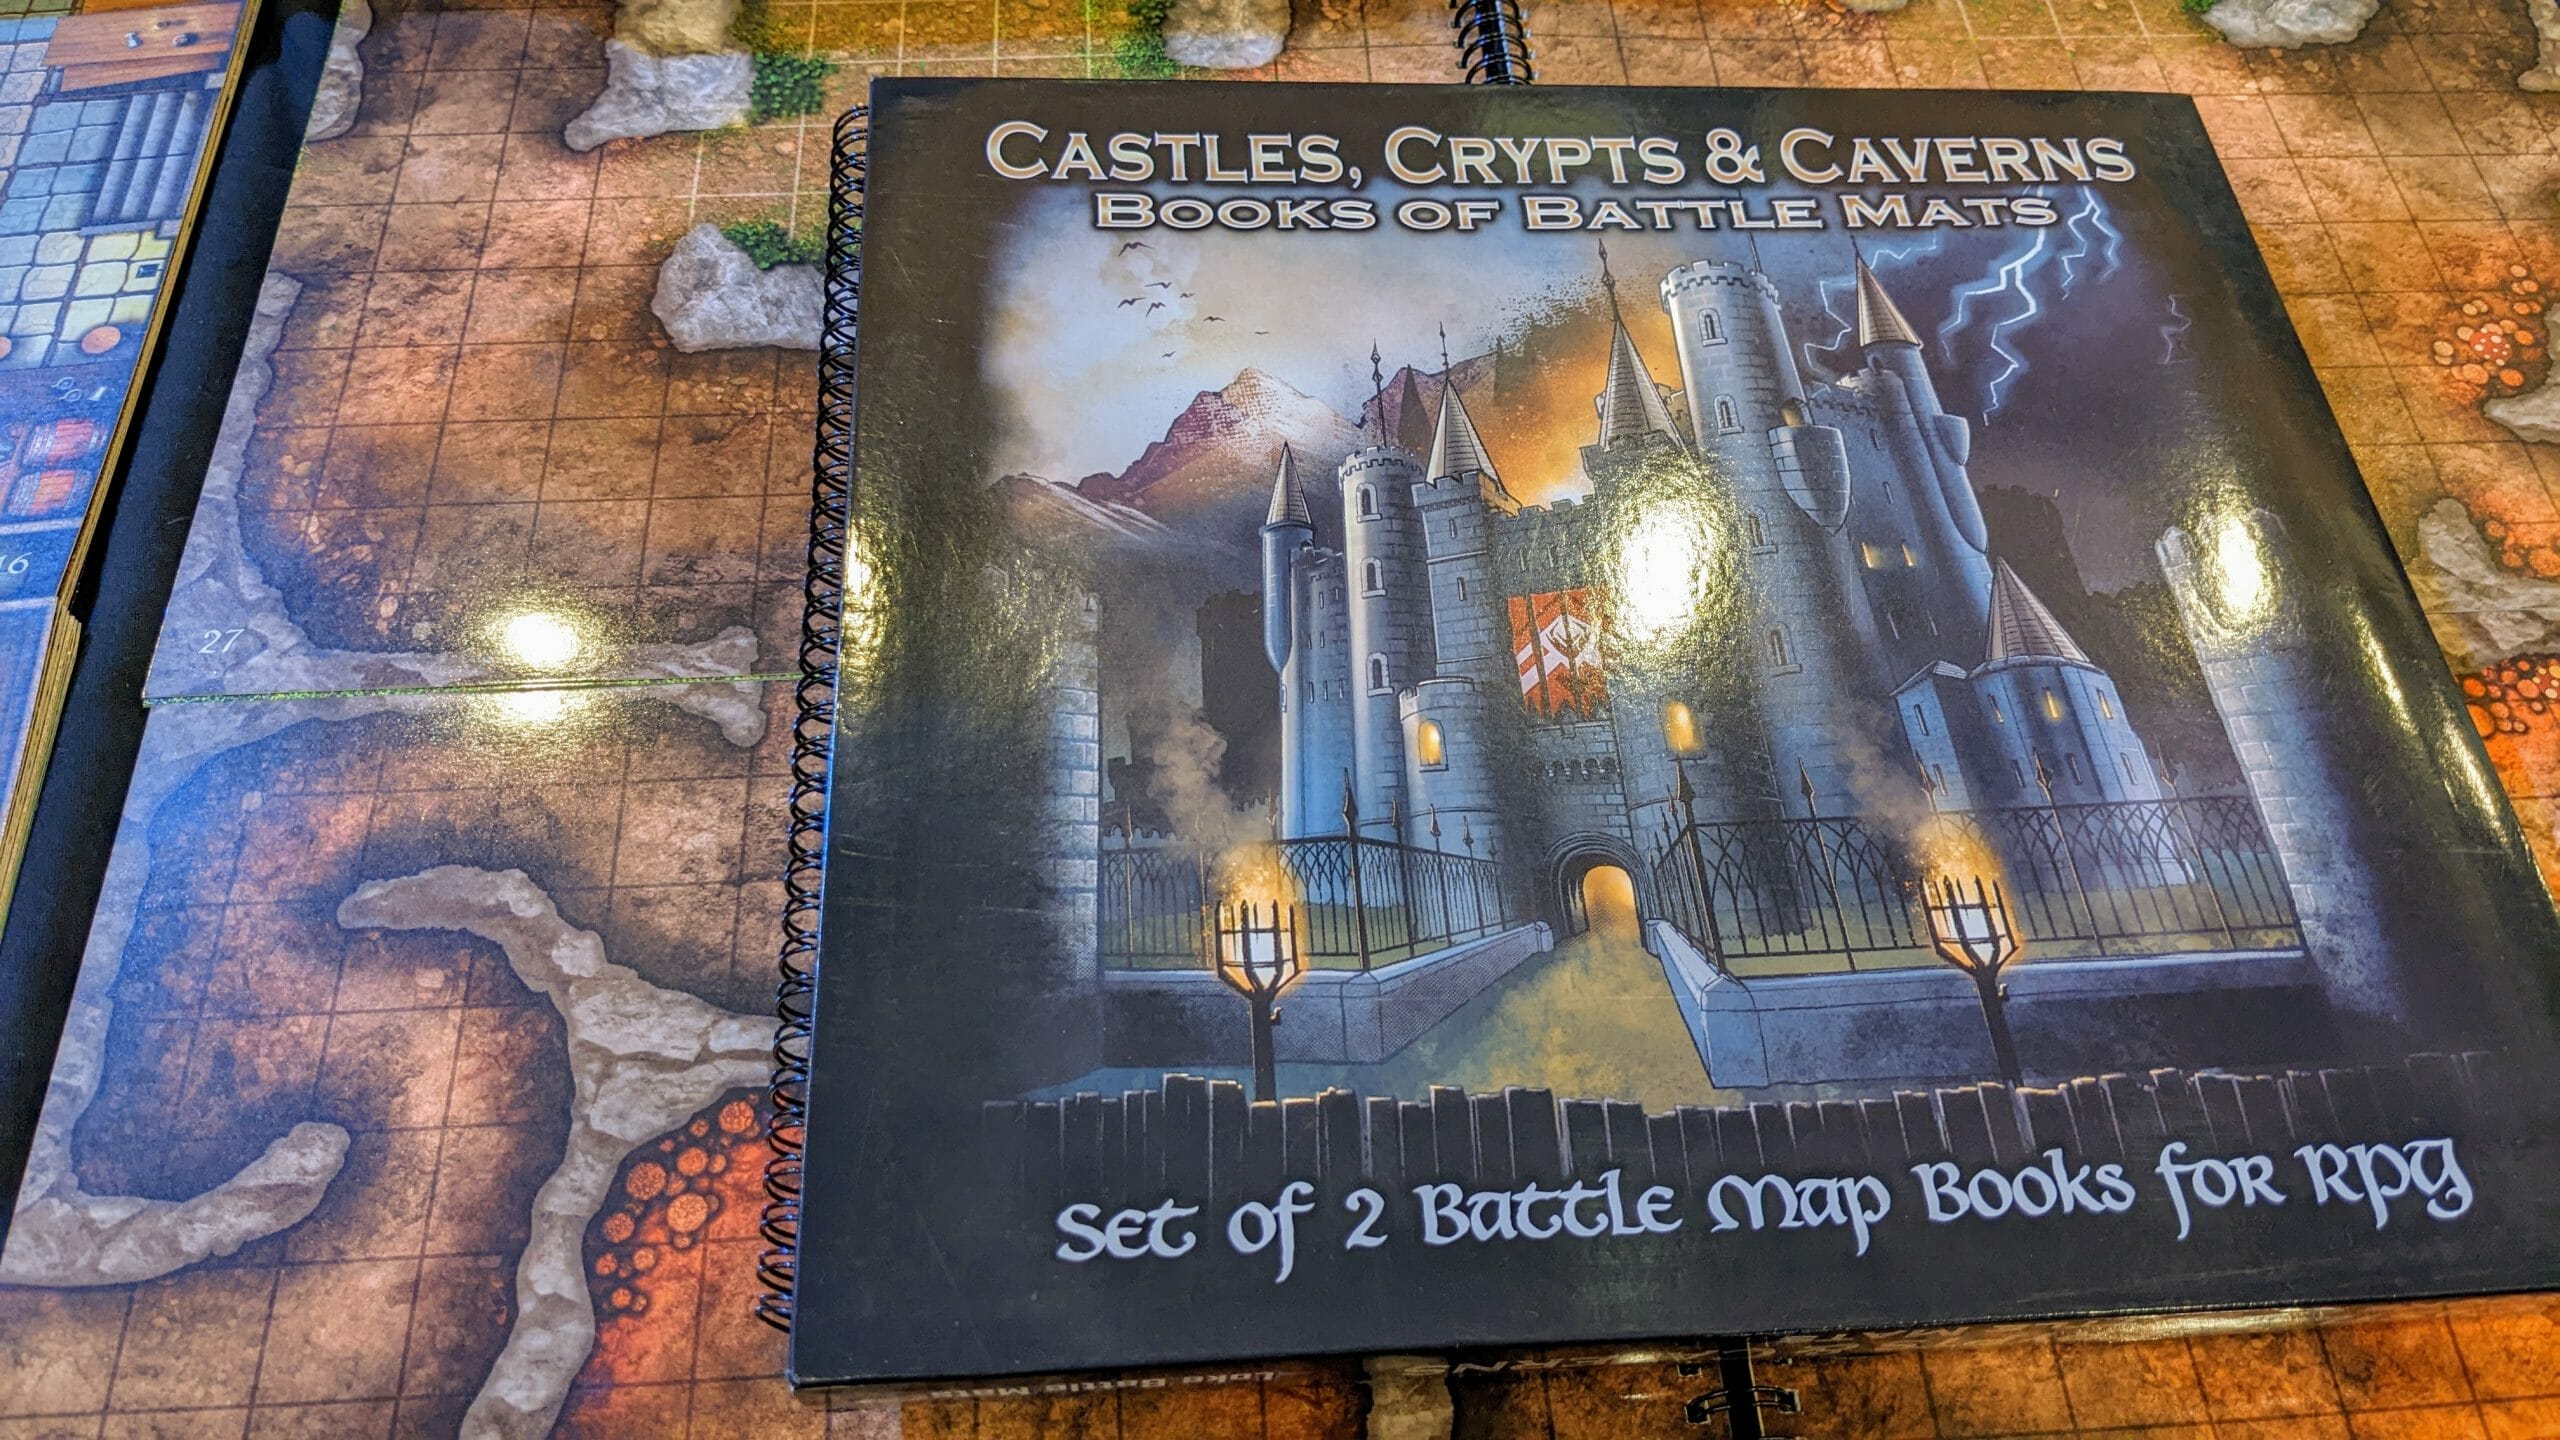 Castles, Crypts & Caverns - Books of Battle Mats